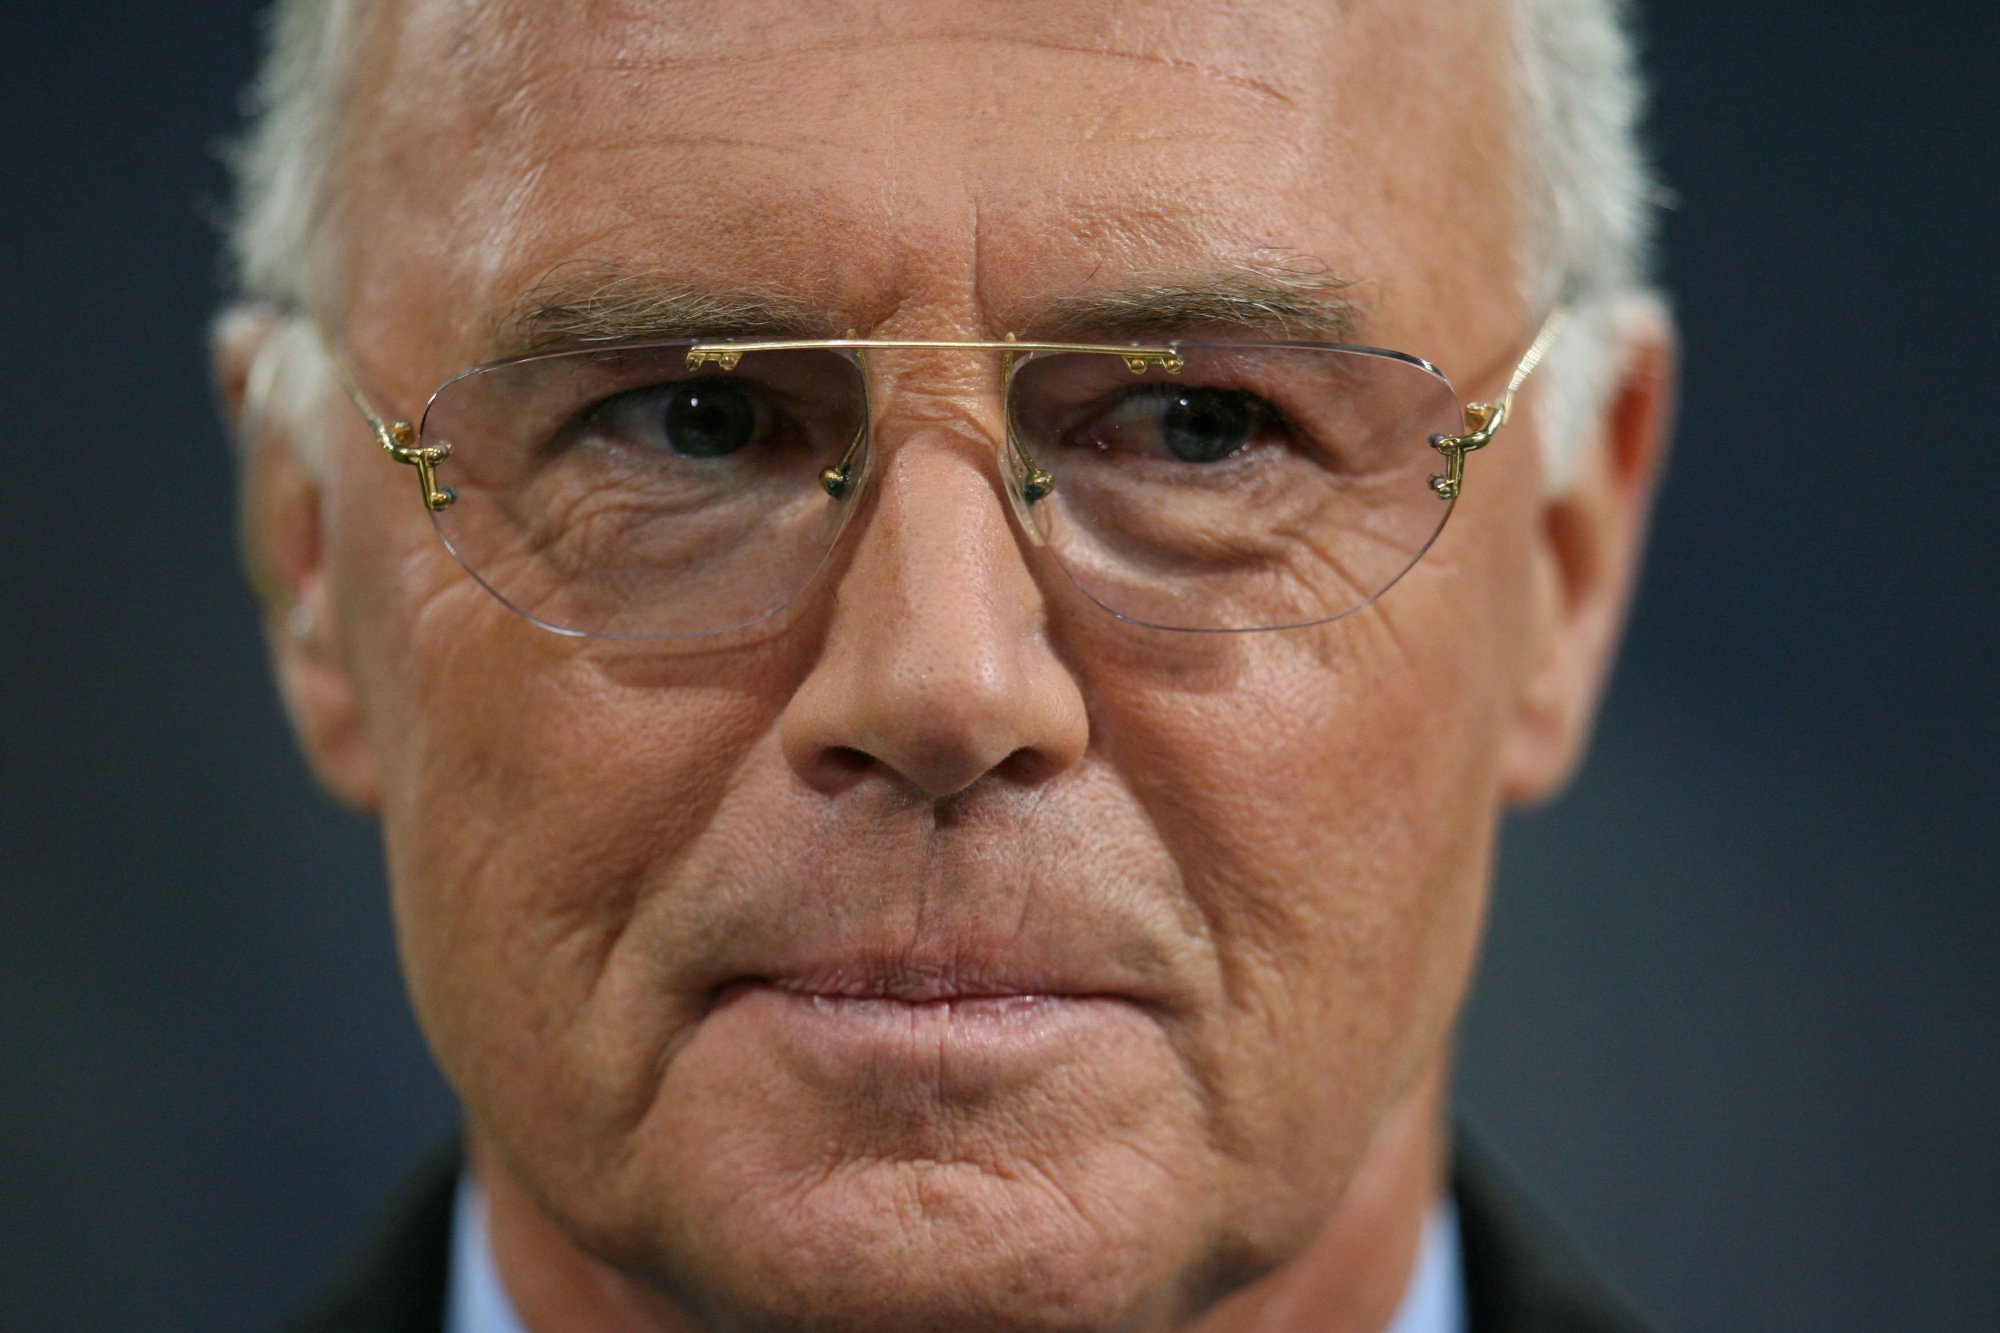 German Football Legend Franz Beckenbauer Has Died at 78